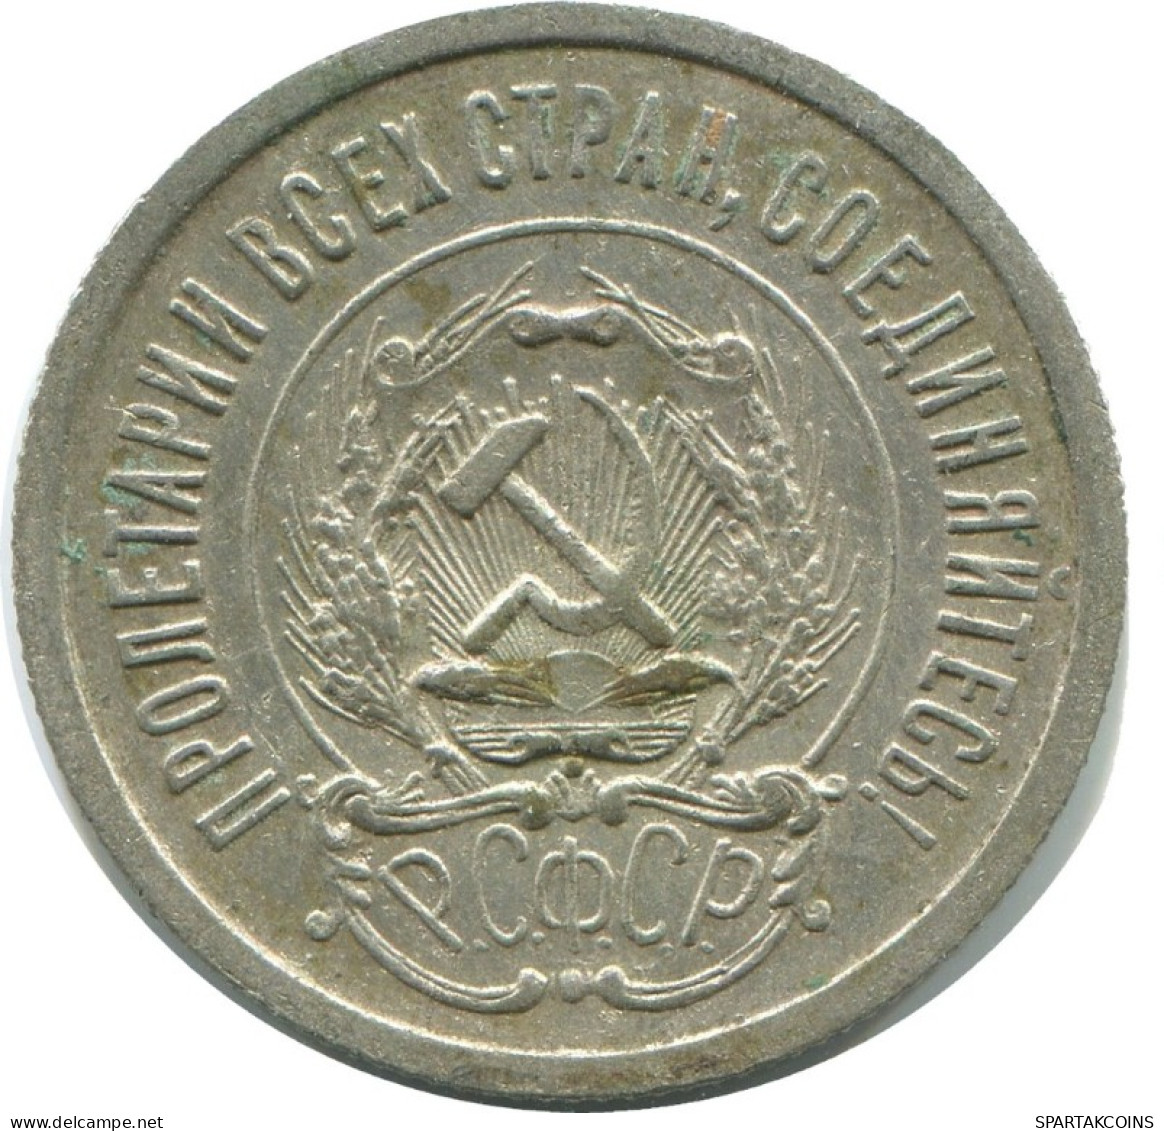 20 KOPEKS 1923 RUSSIA RSFSR SILVER Coin HIGH GRADE #AF678.U.A - Russia